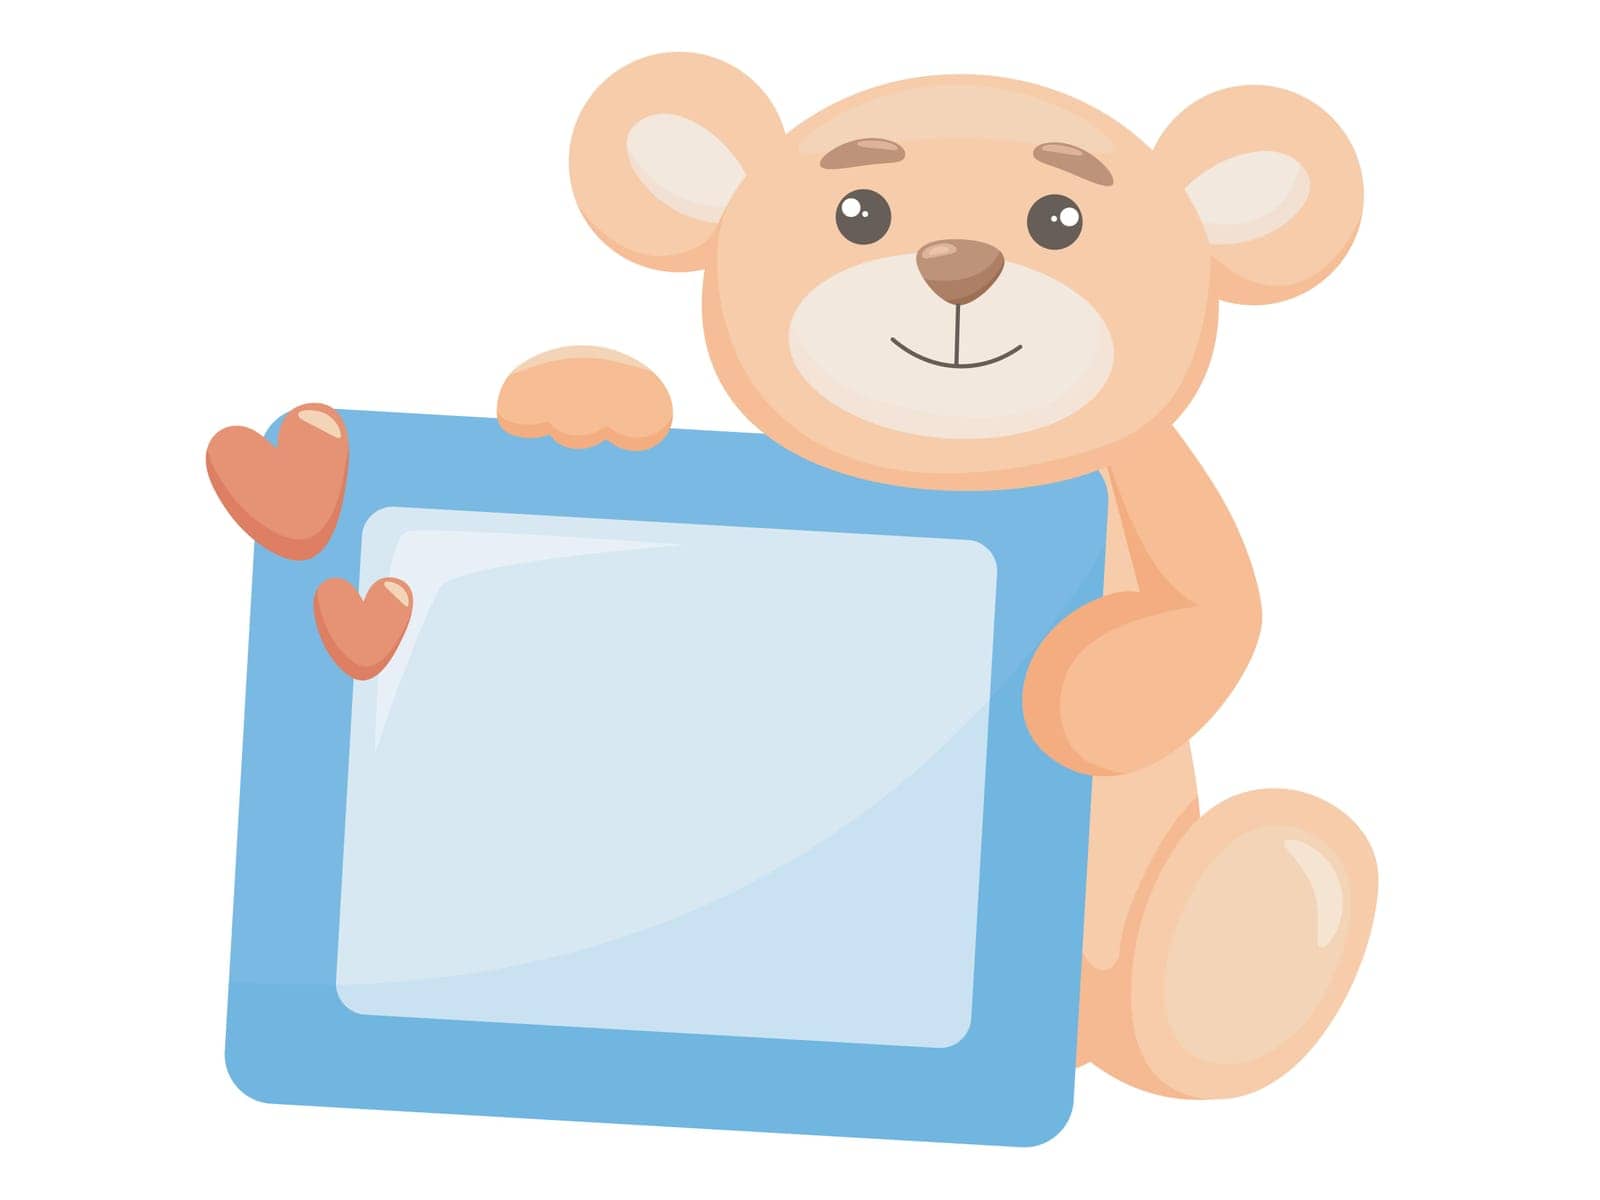 Teddy bear holding an empty photo frame cartoon style. Cute baby illustration with teddy bear and copy space, vector illustration